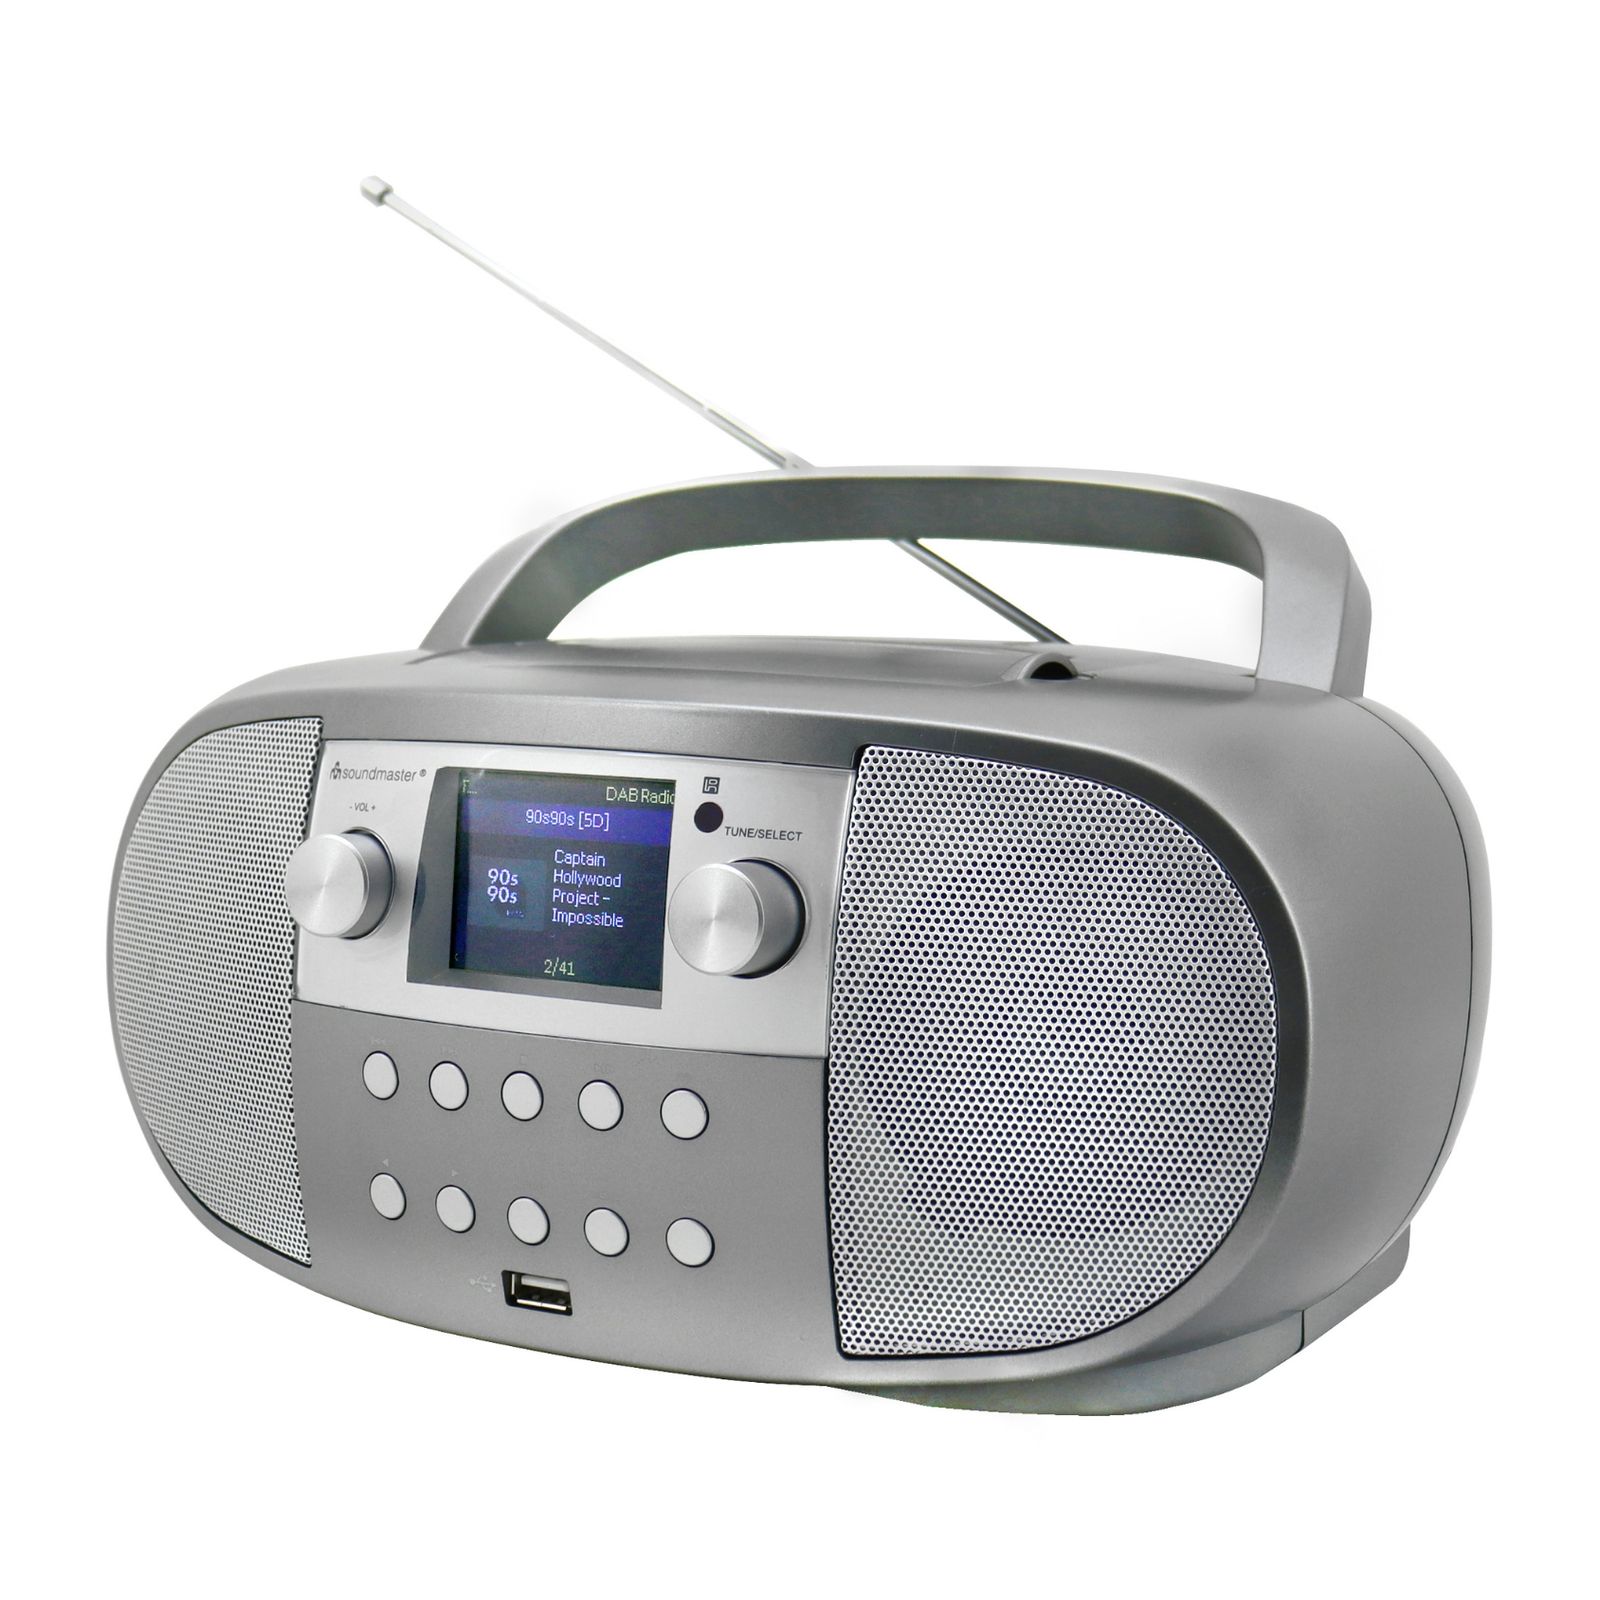 Soundmaster SCD7600TI Boombox Internet radio WLAN network radio DLNA Bluetooth DAB+ CD USB MP3 Alarm clock function Audio book function Color display